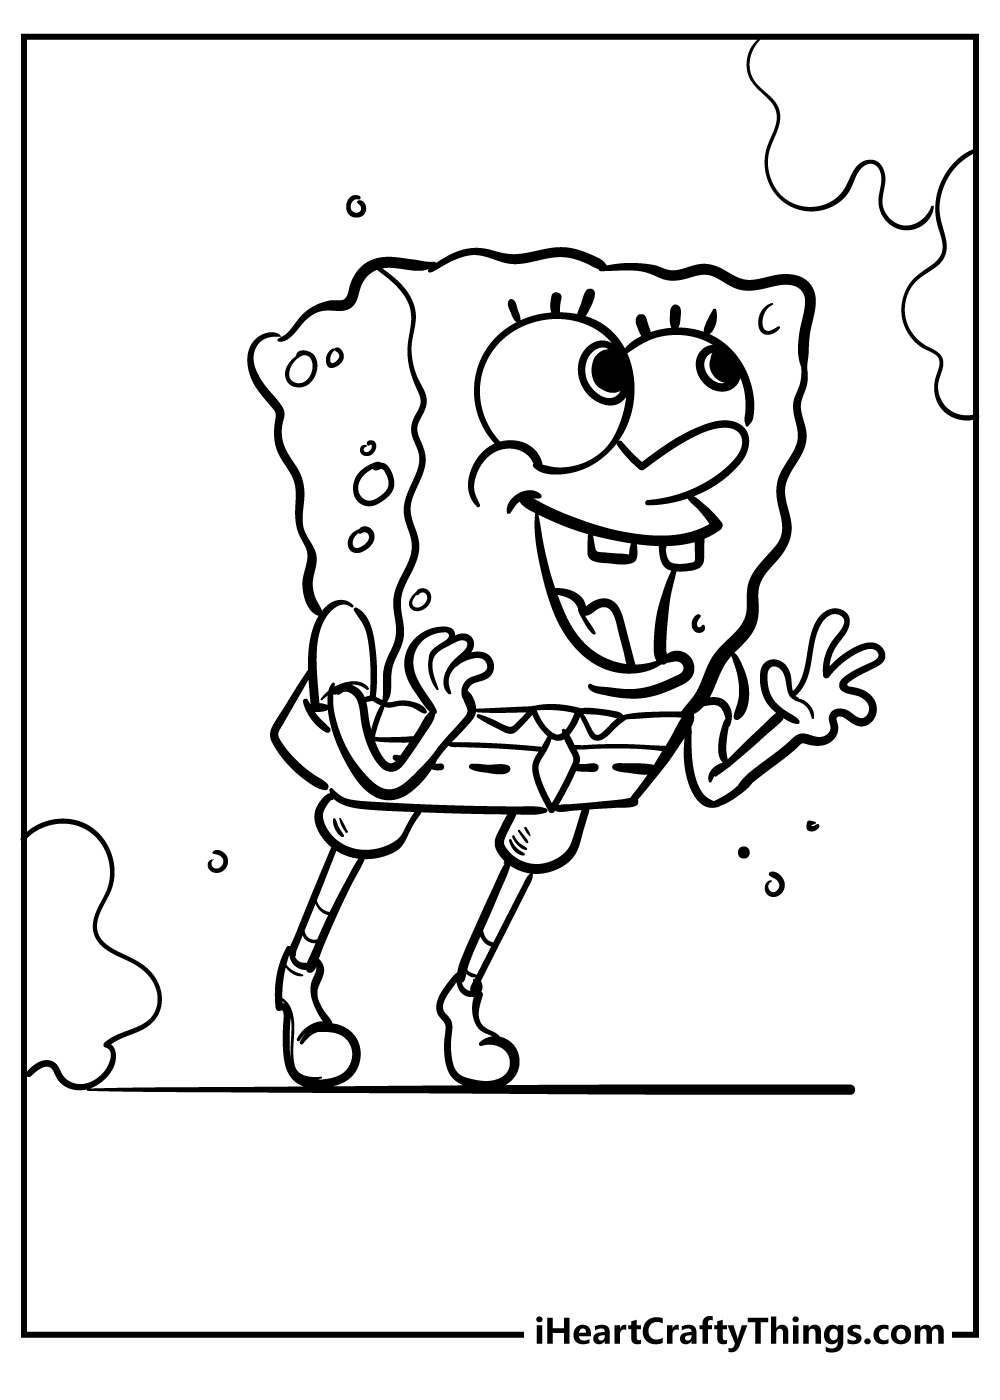 Sponge Bob coloring pages free printable